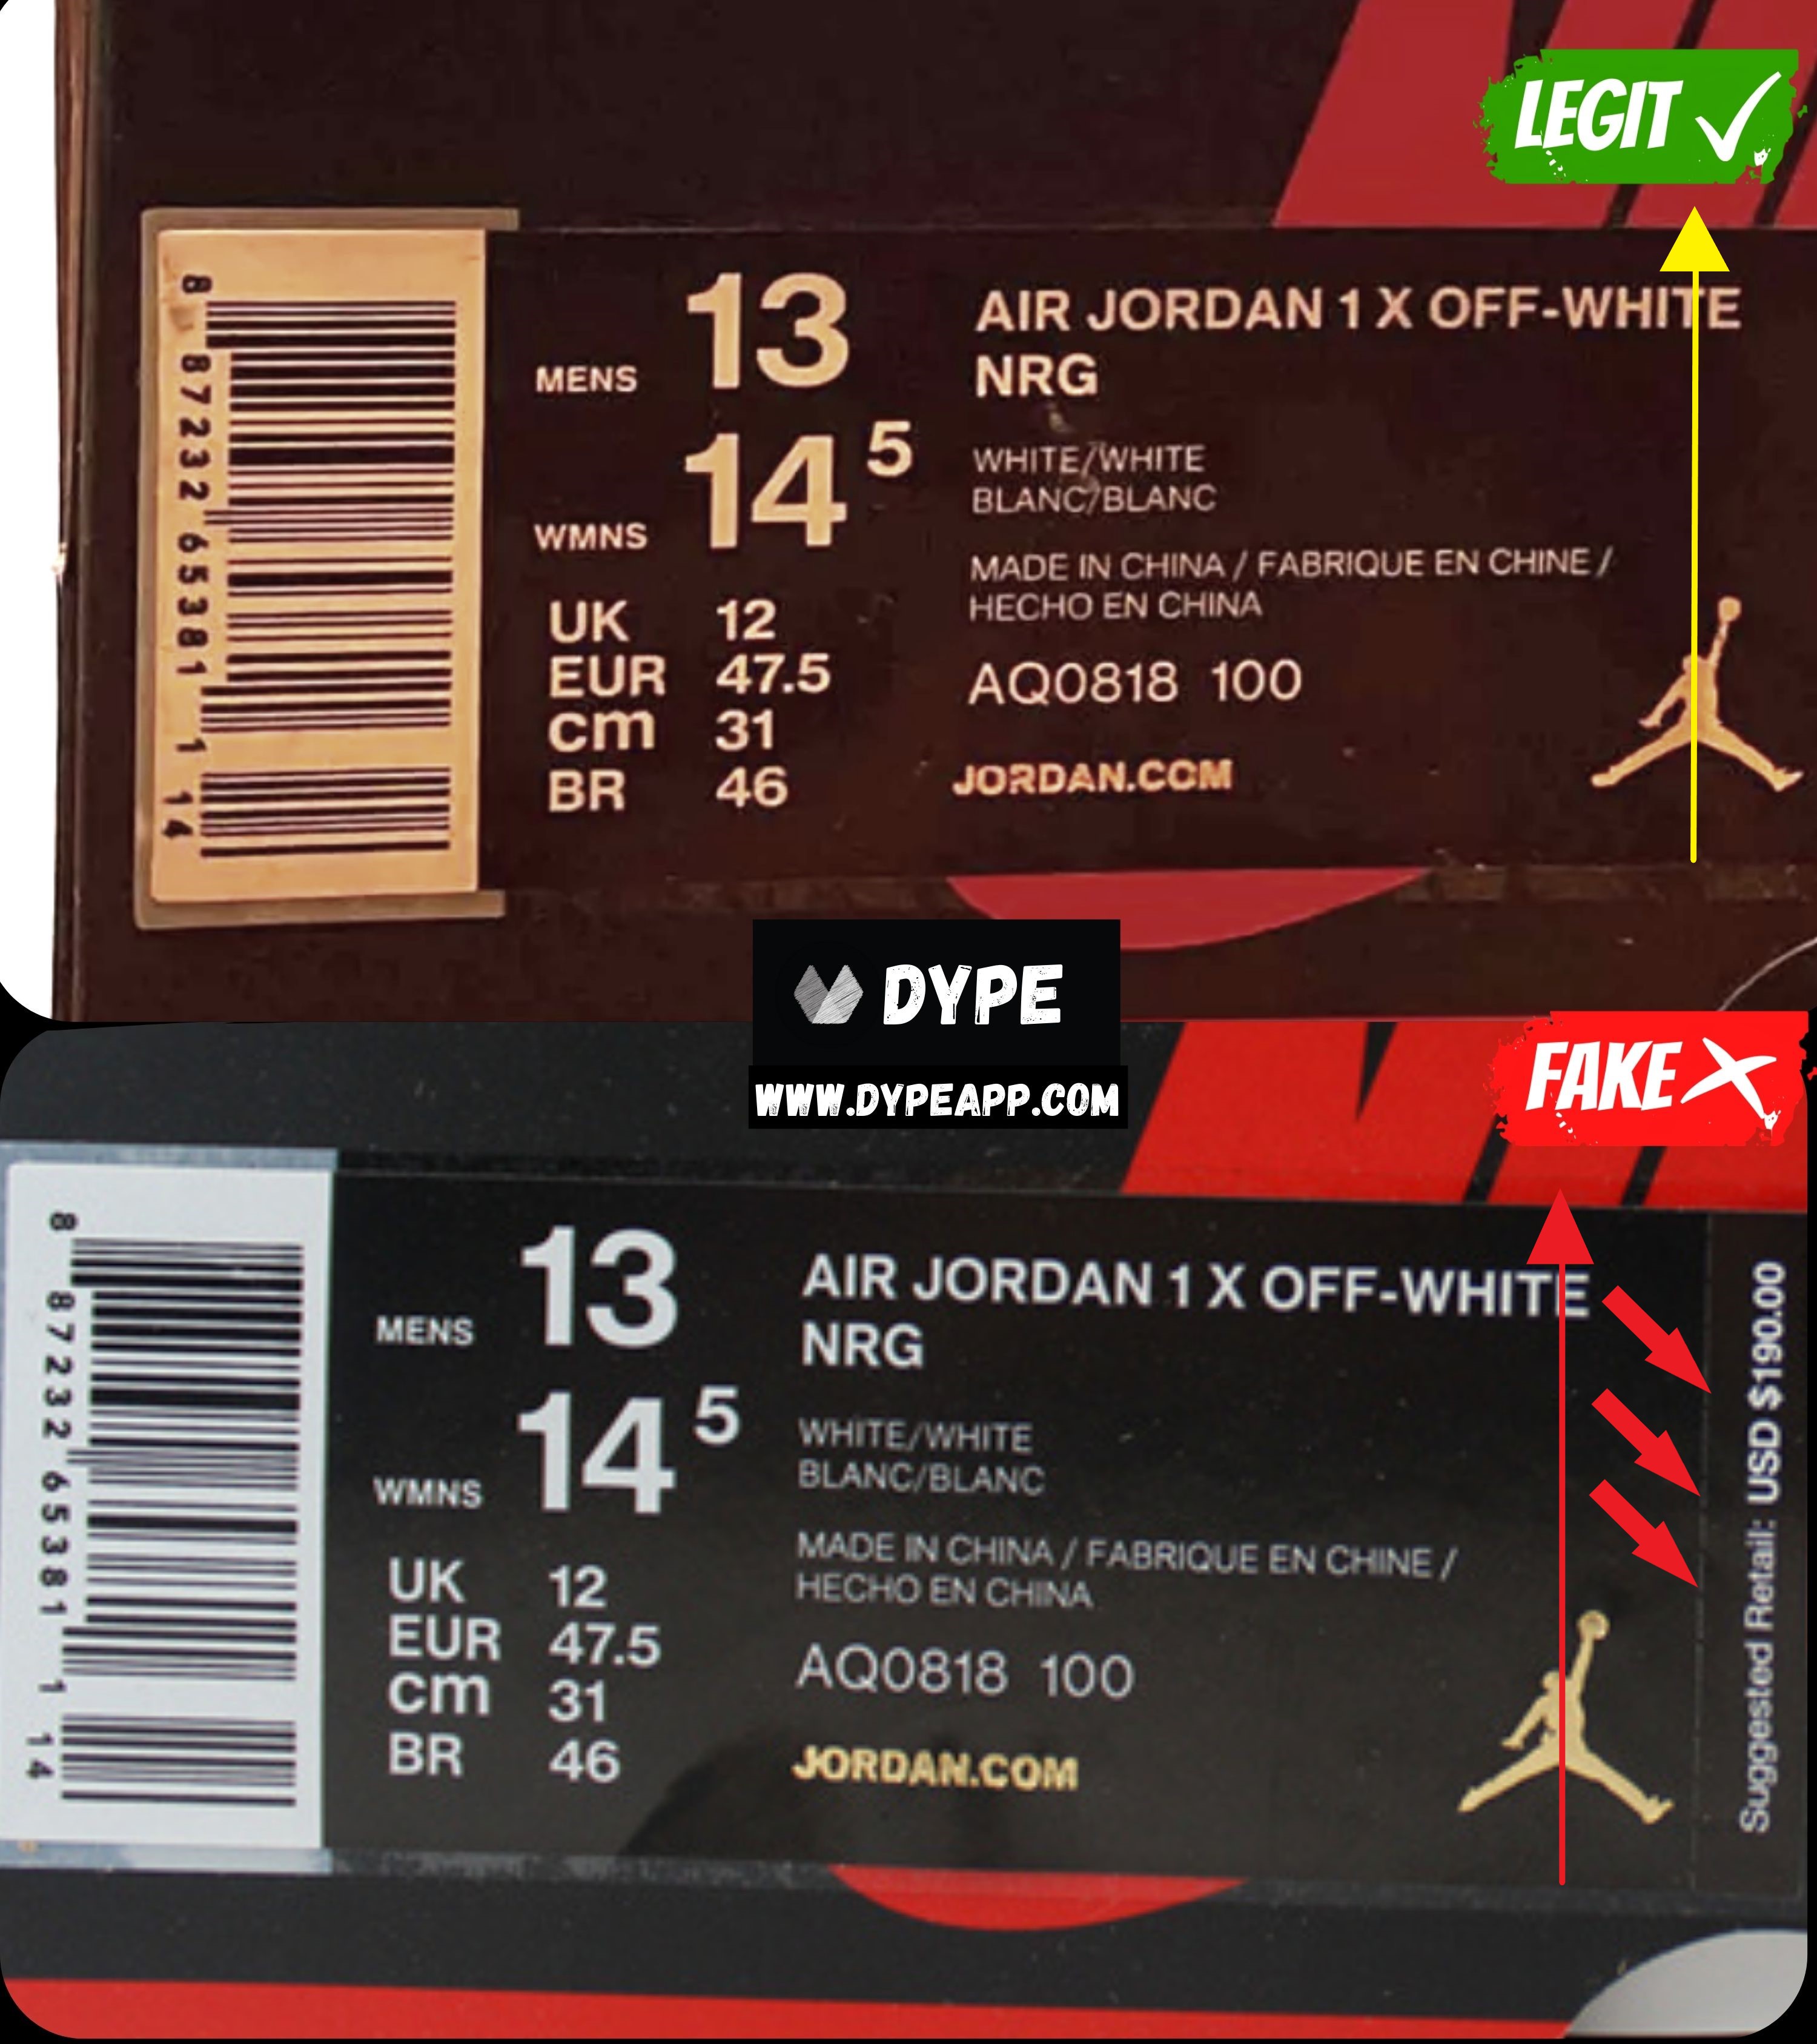 Jordan 1 Off-White NRG Legit Check: Real Vs Fake - Legit Check By Ch